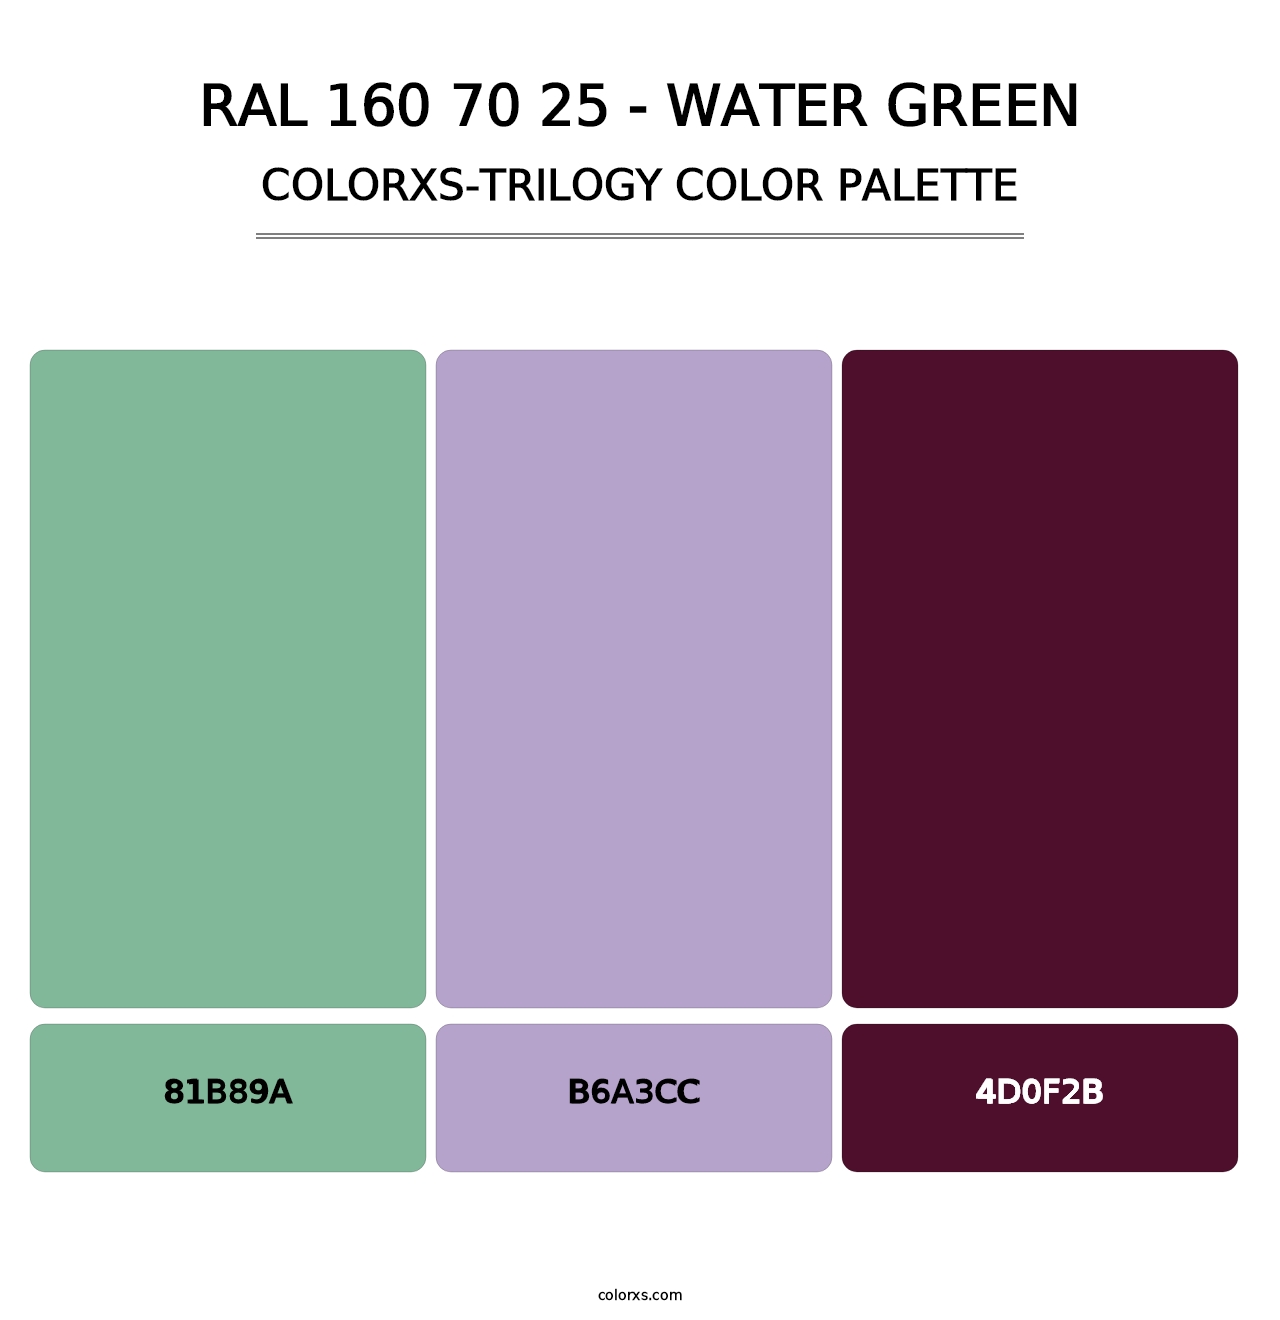 RAL 160 70 25 - Water Green - Colorxs Trilogy Palette